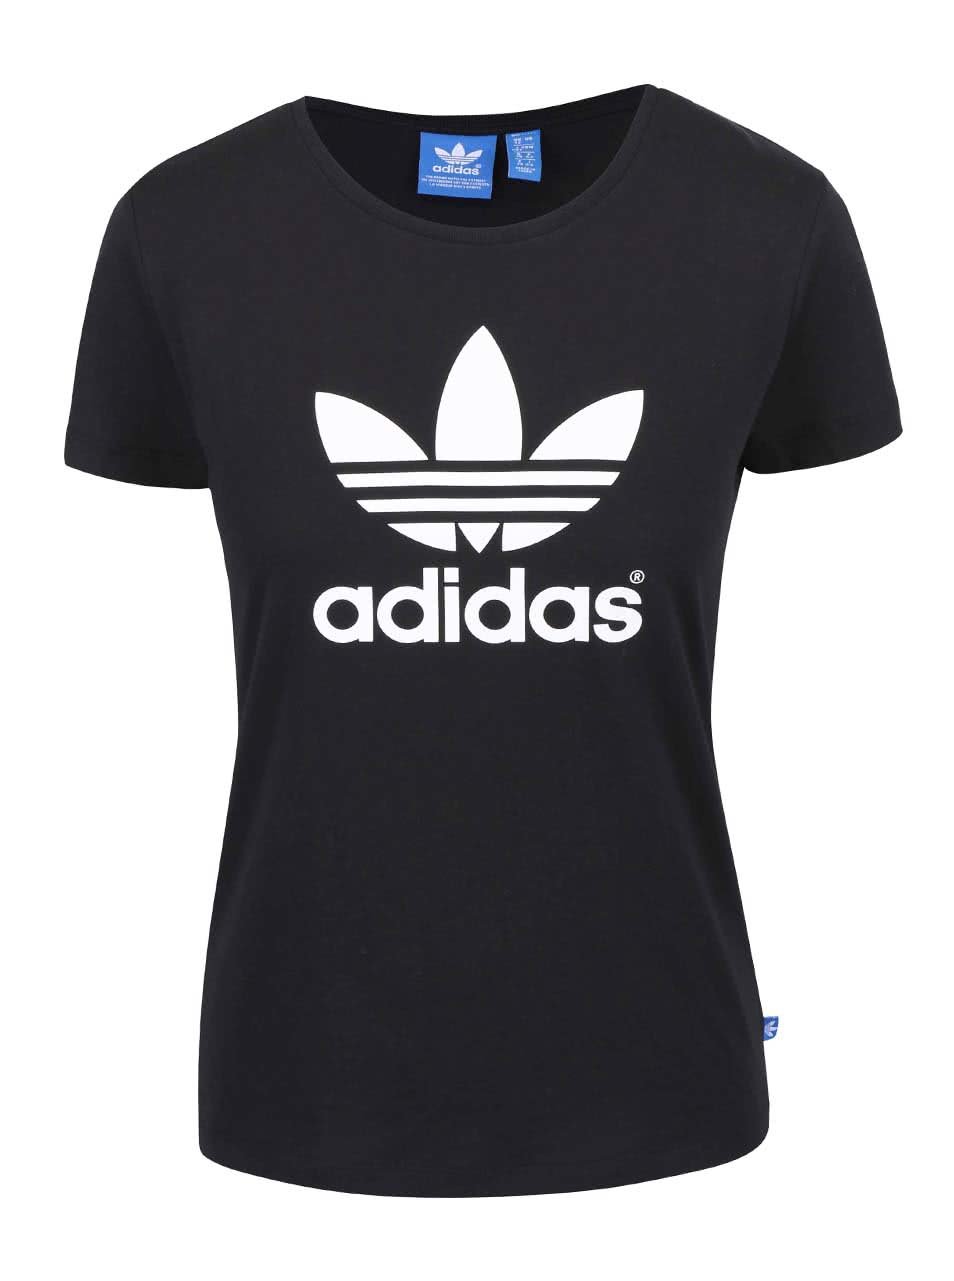 Černé dámské tričko s potiskem loga adidas Originals